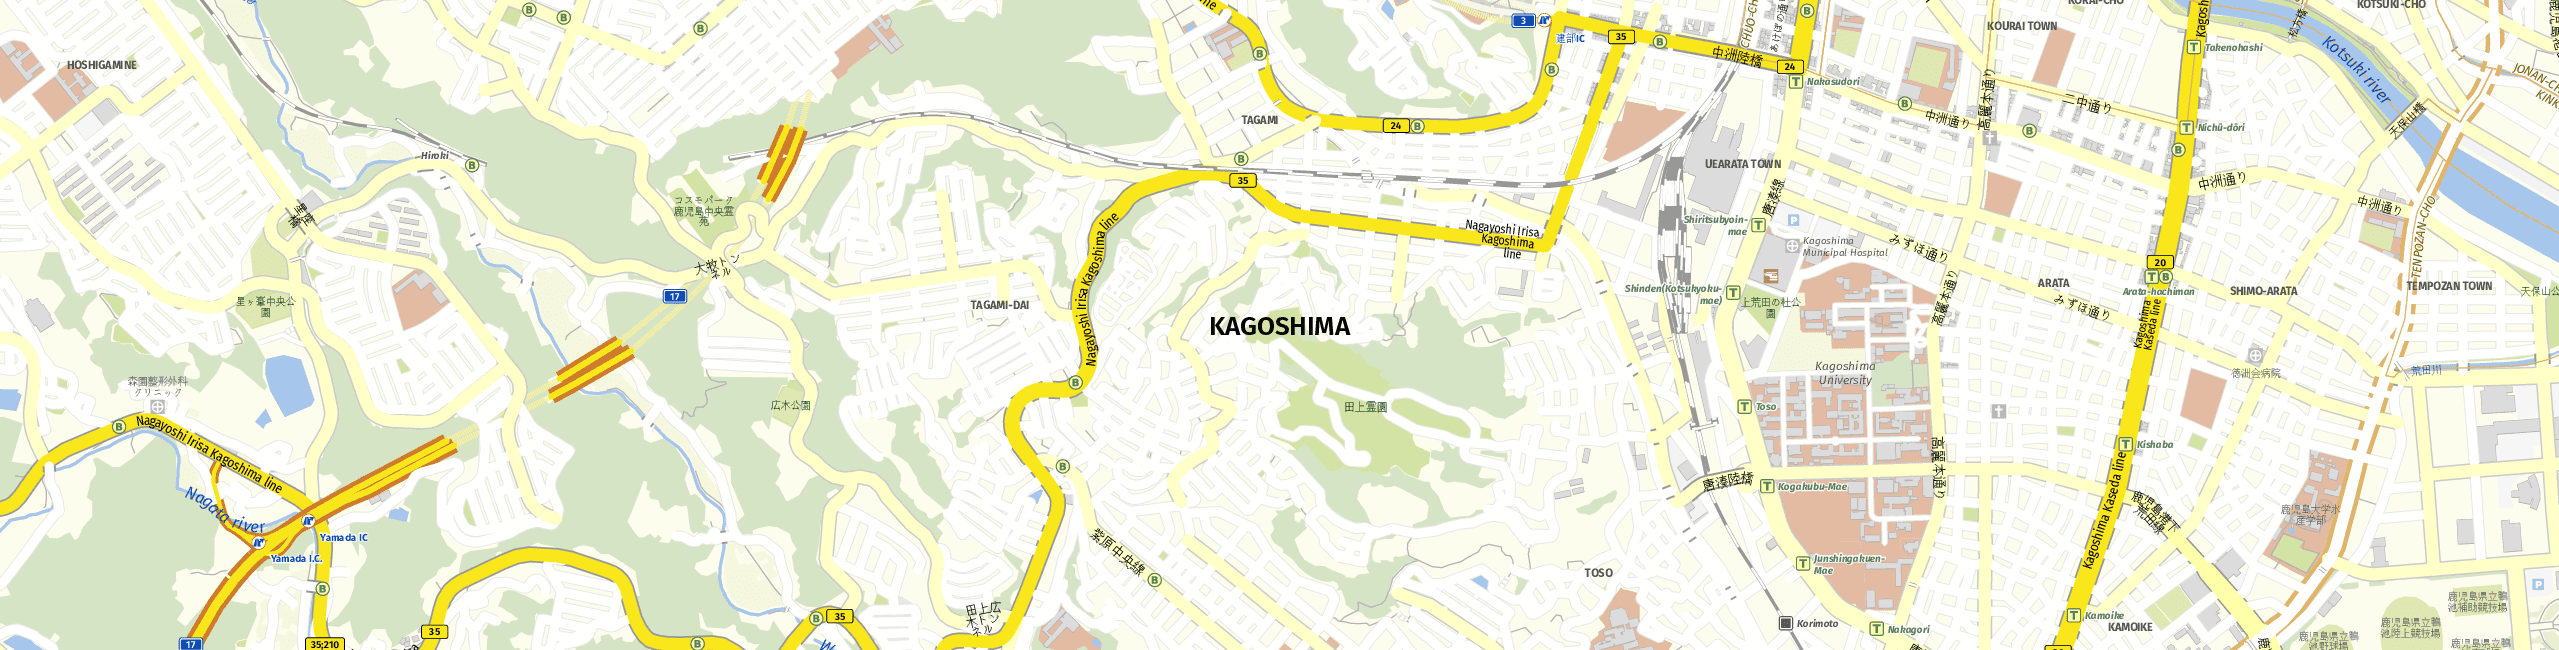 Stadtplan Kagoshima zum Downloaden.